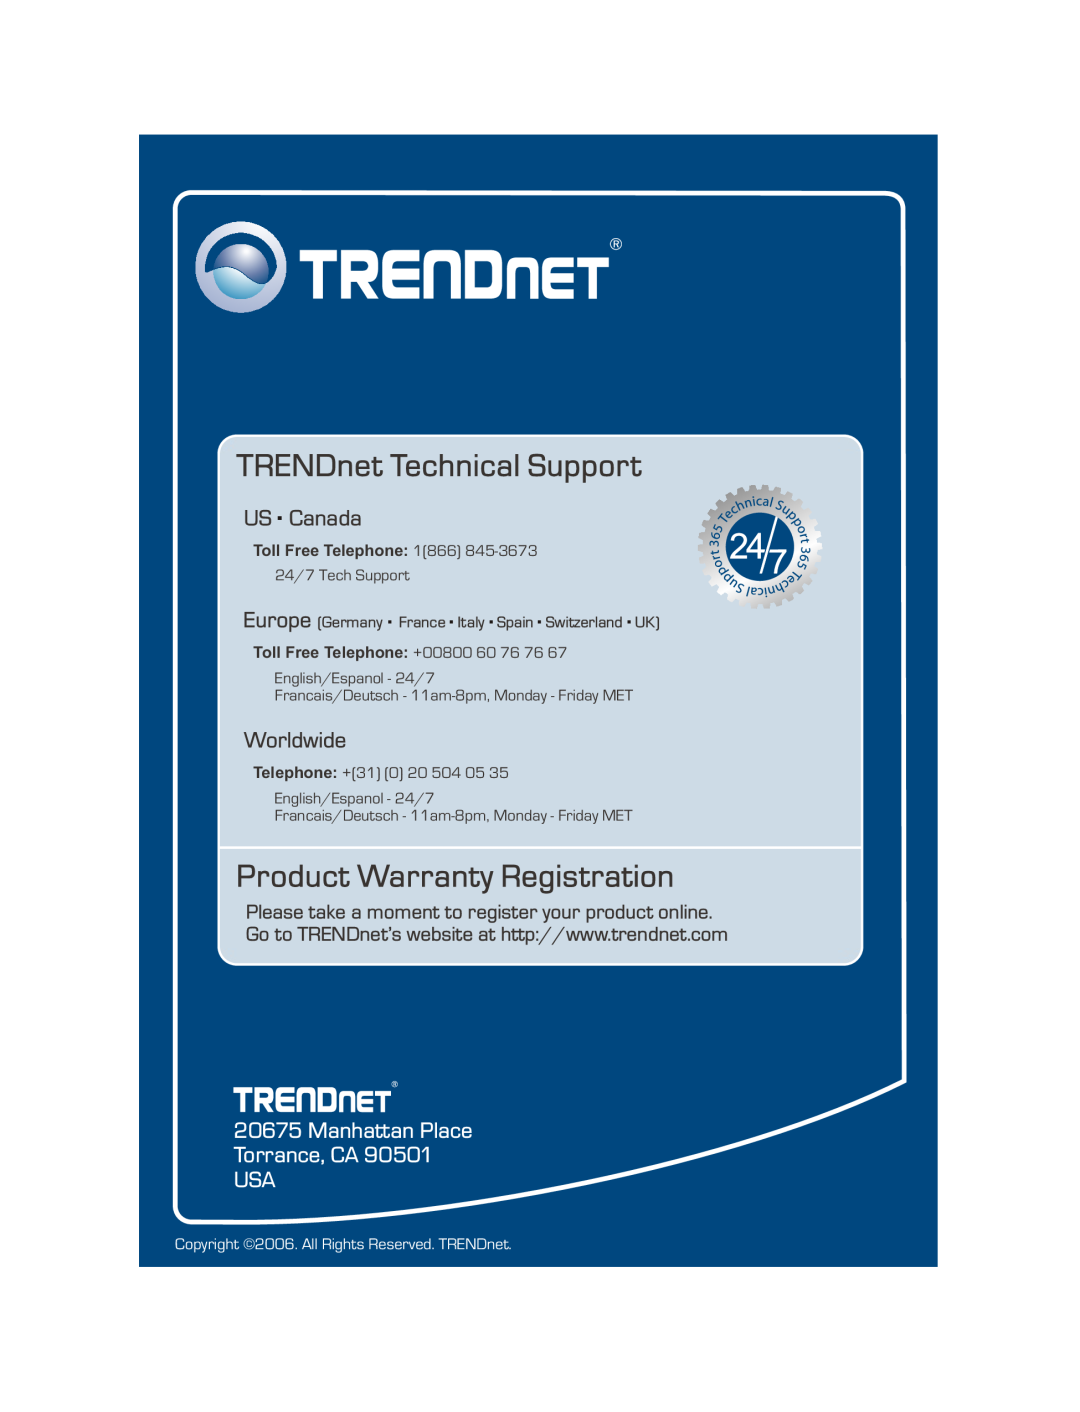 TRENDnet TDM-E400 TRENDnet Technical Support, Product Warranty Registration, US . Canada, Worldwide, 24/7 Tech Support 